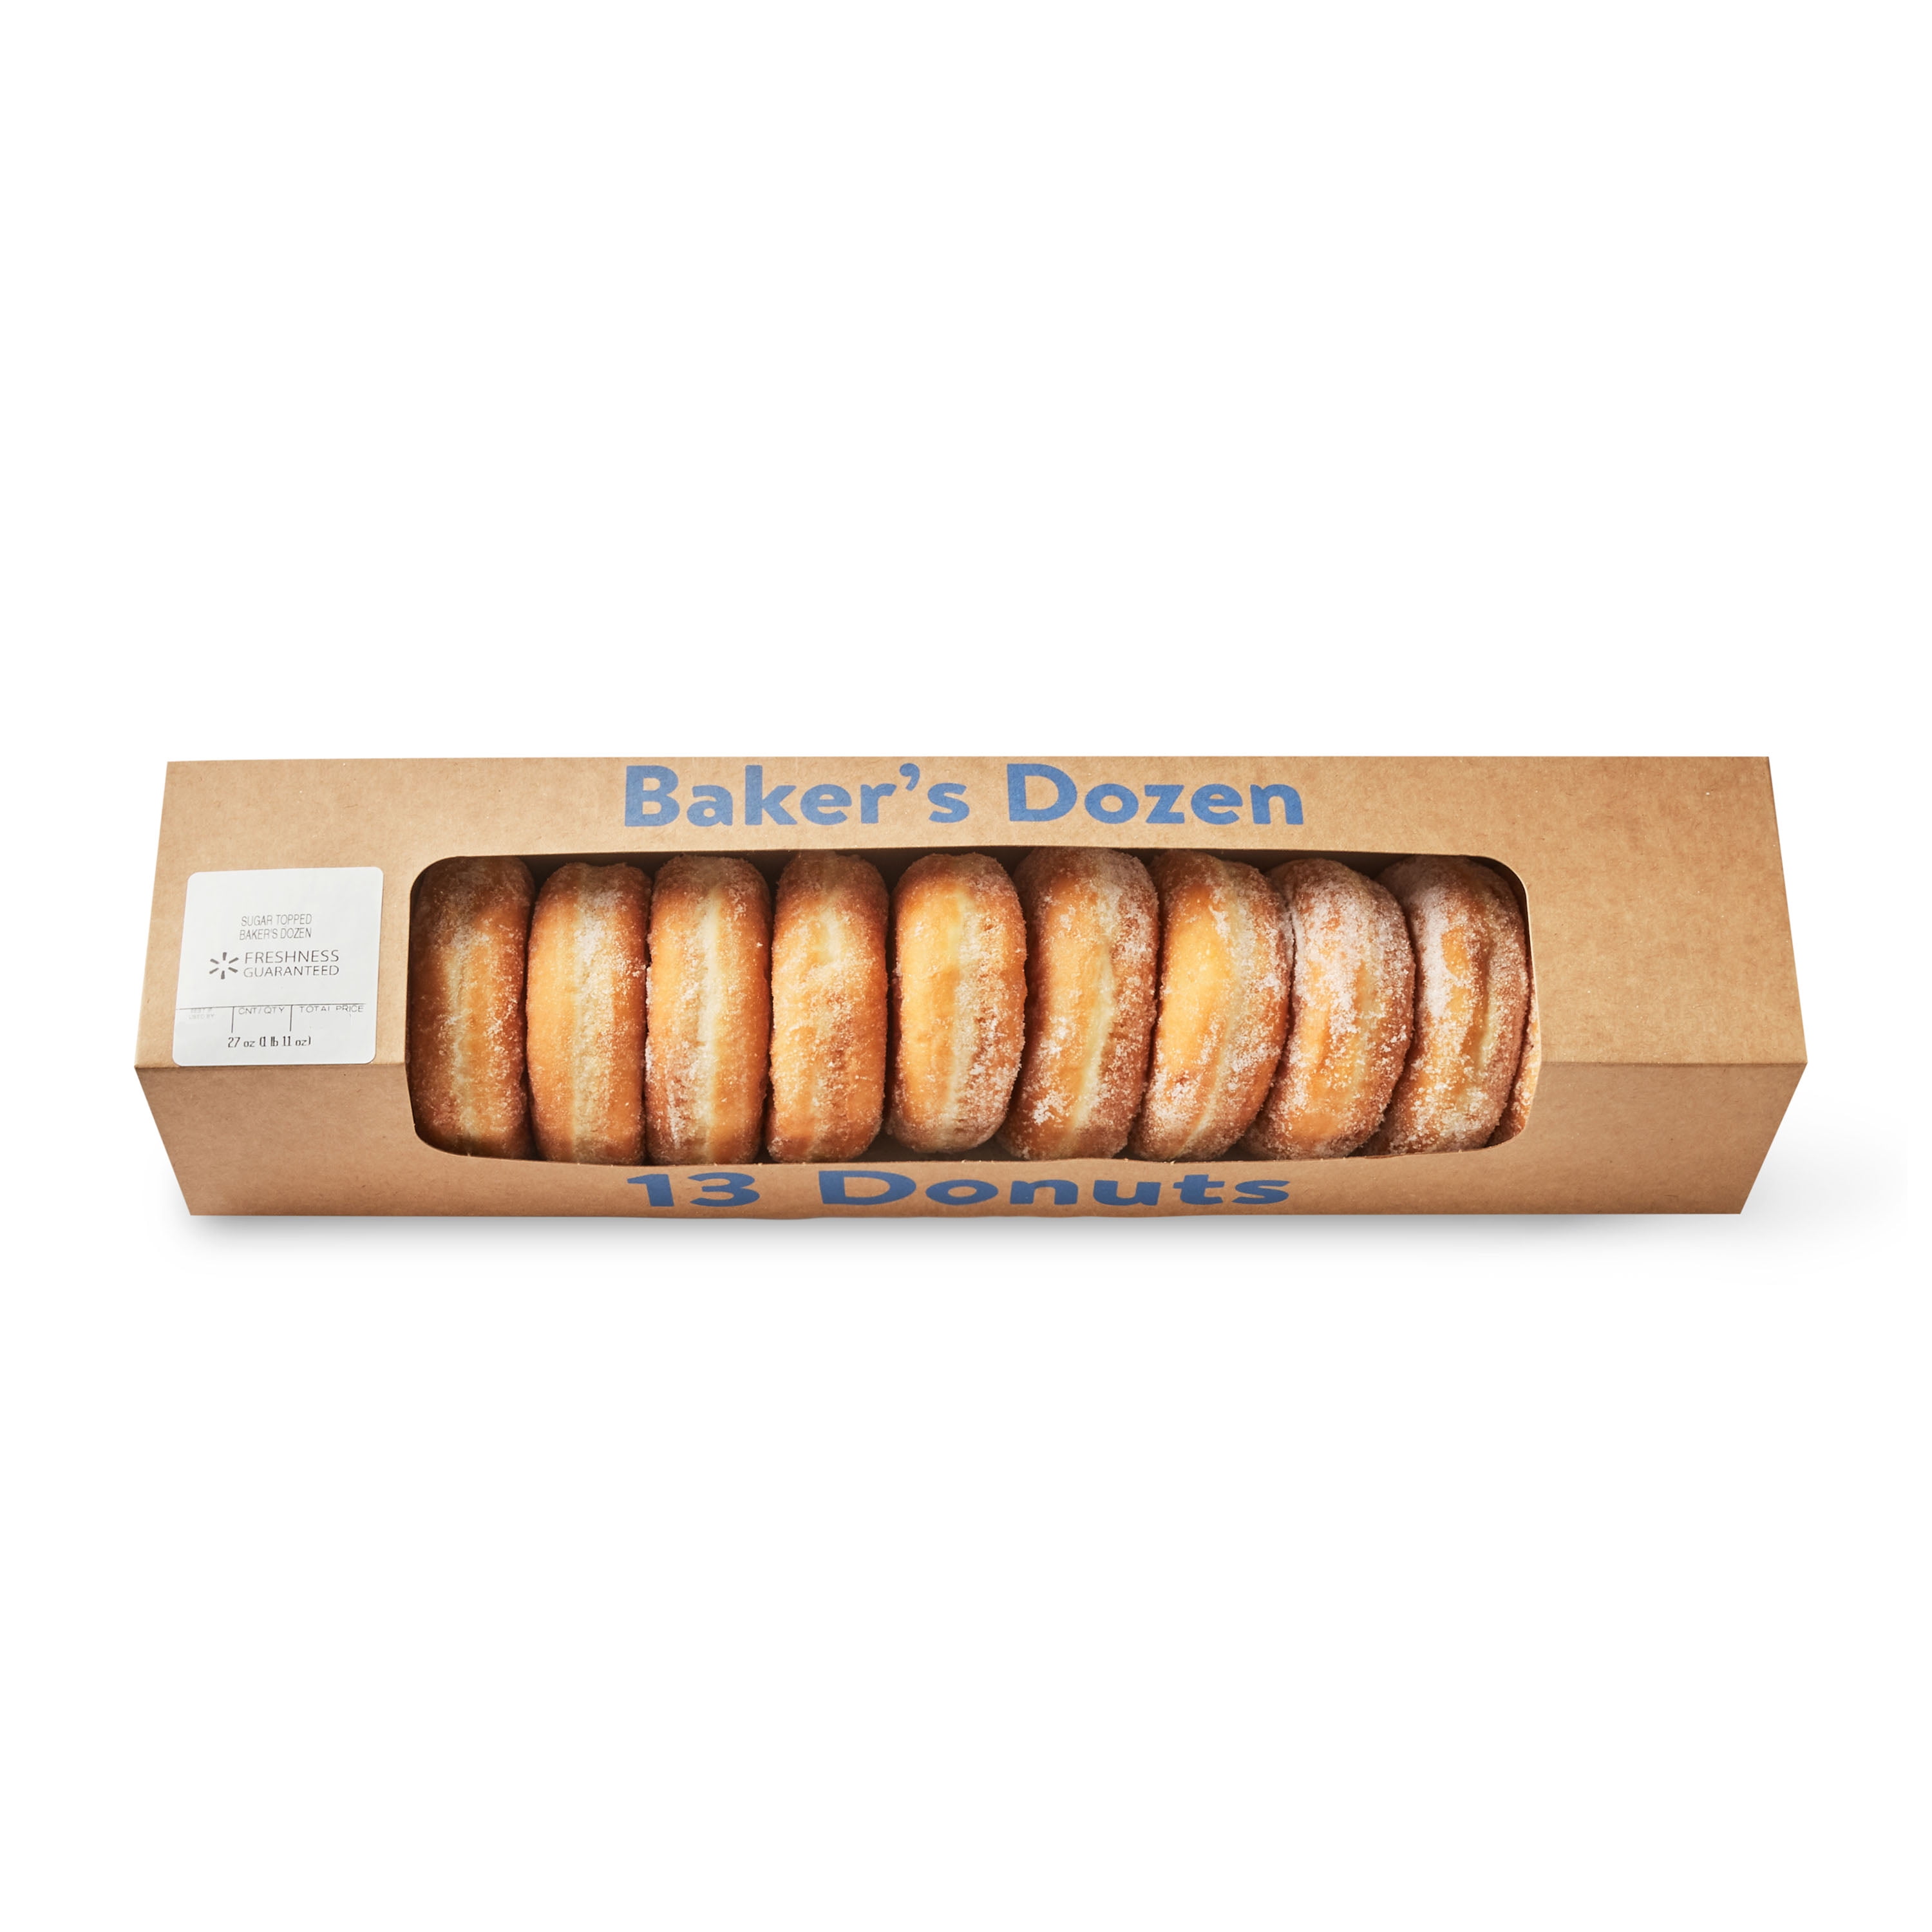 Baker’s Dozen Donuts – Franchise Review